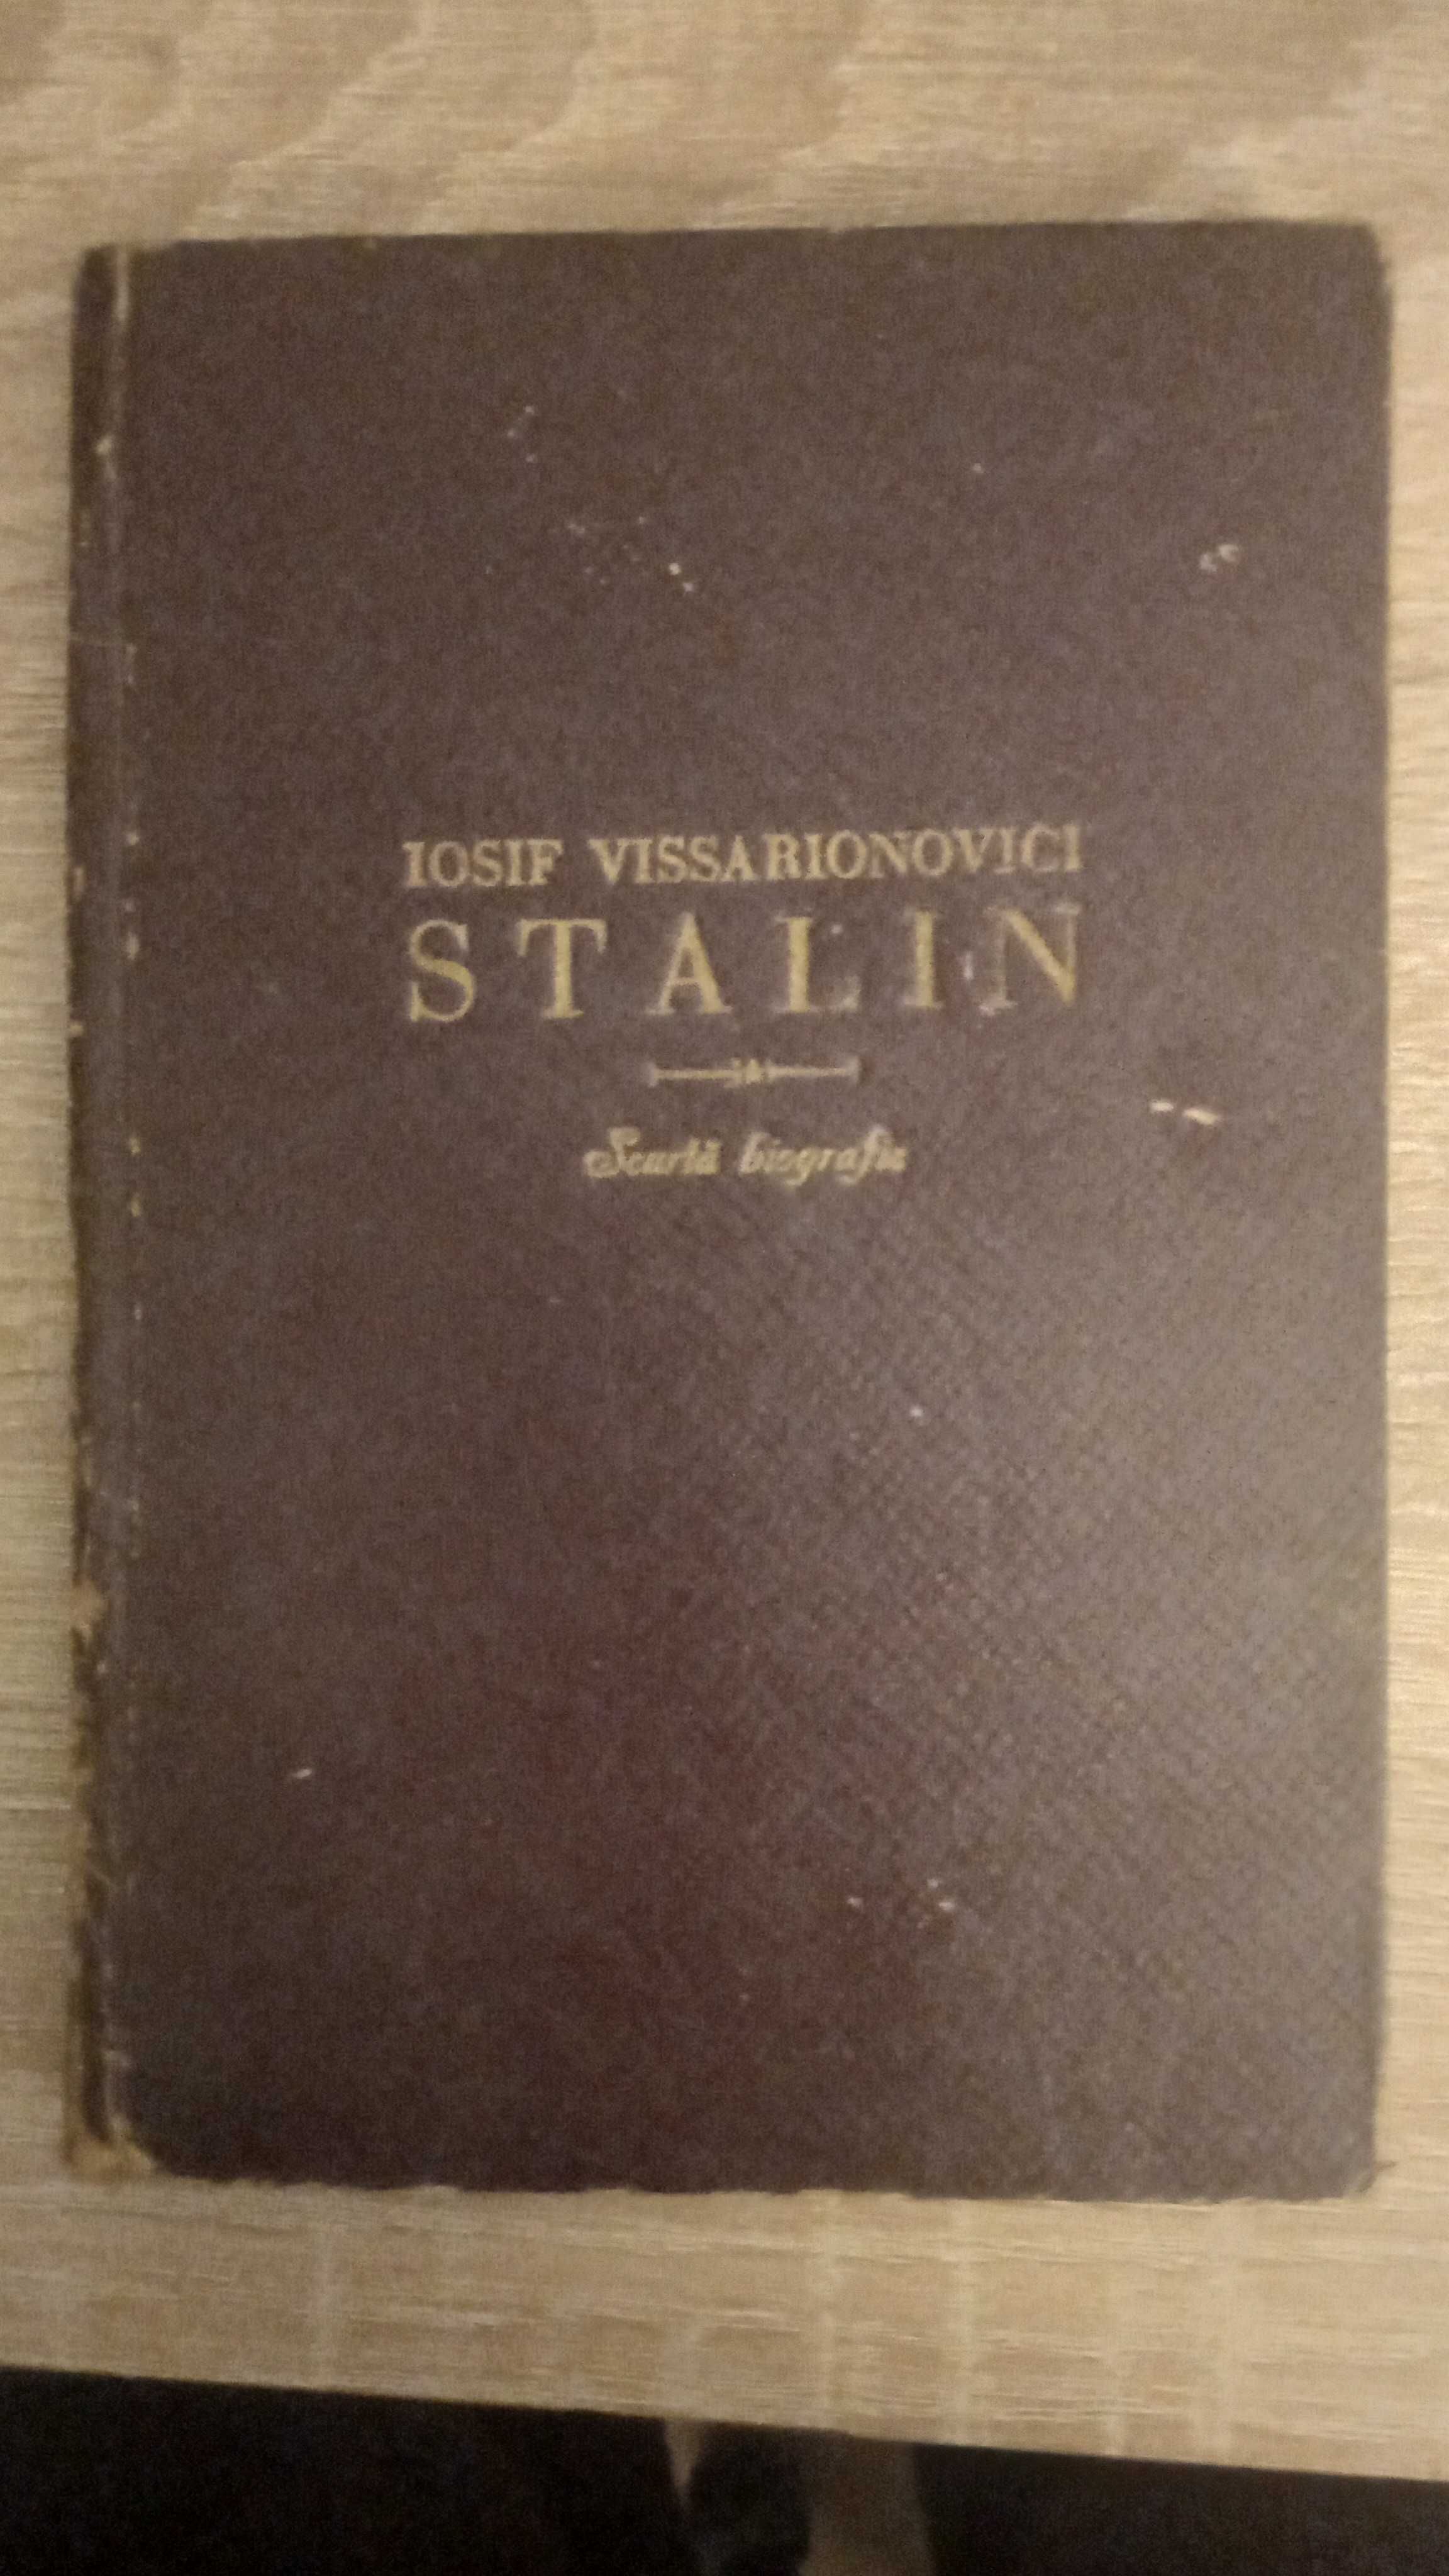 Vand carte veche Biografie I. V. Stalin